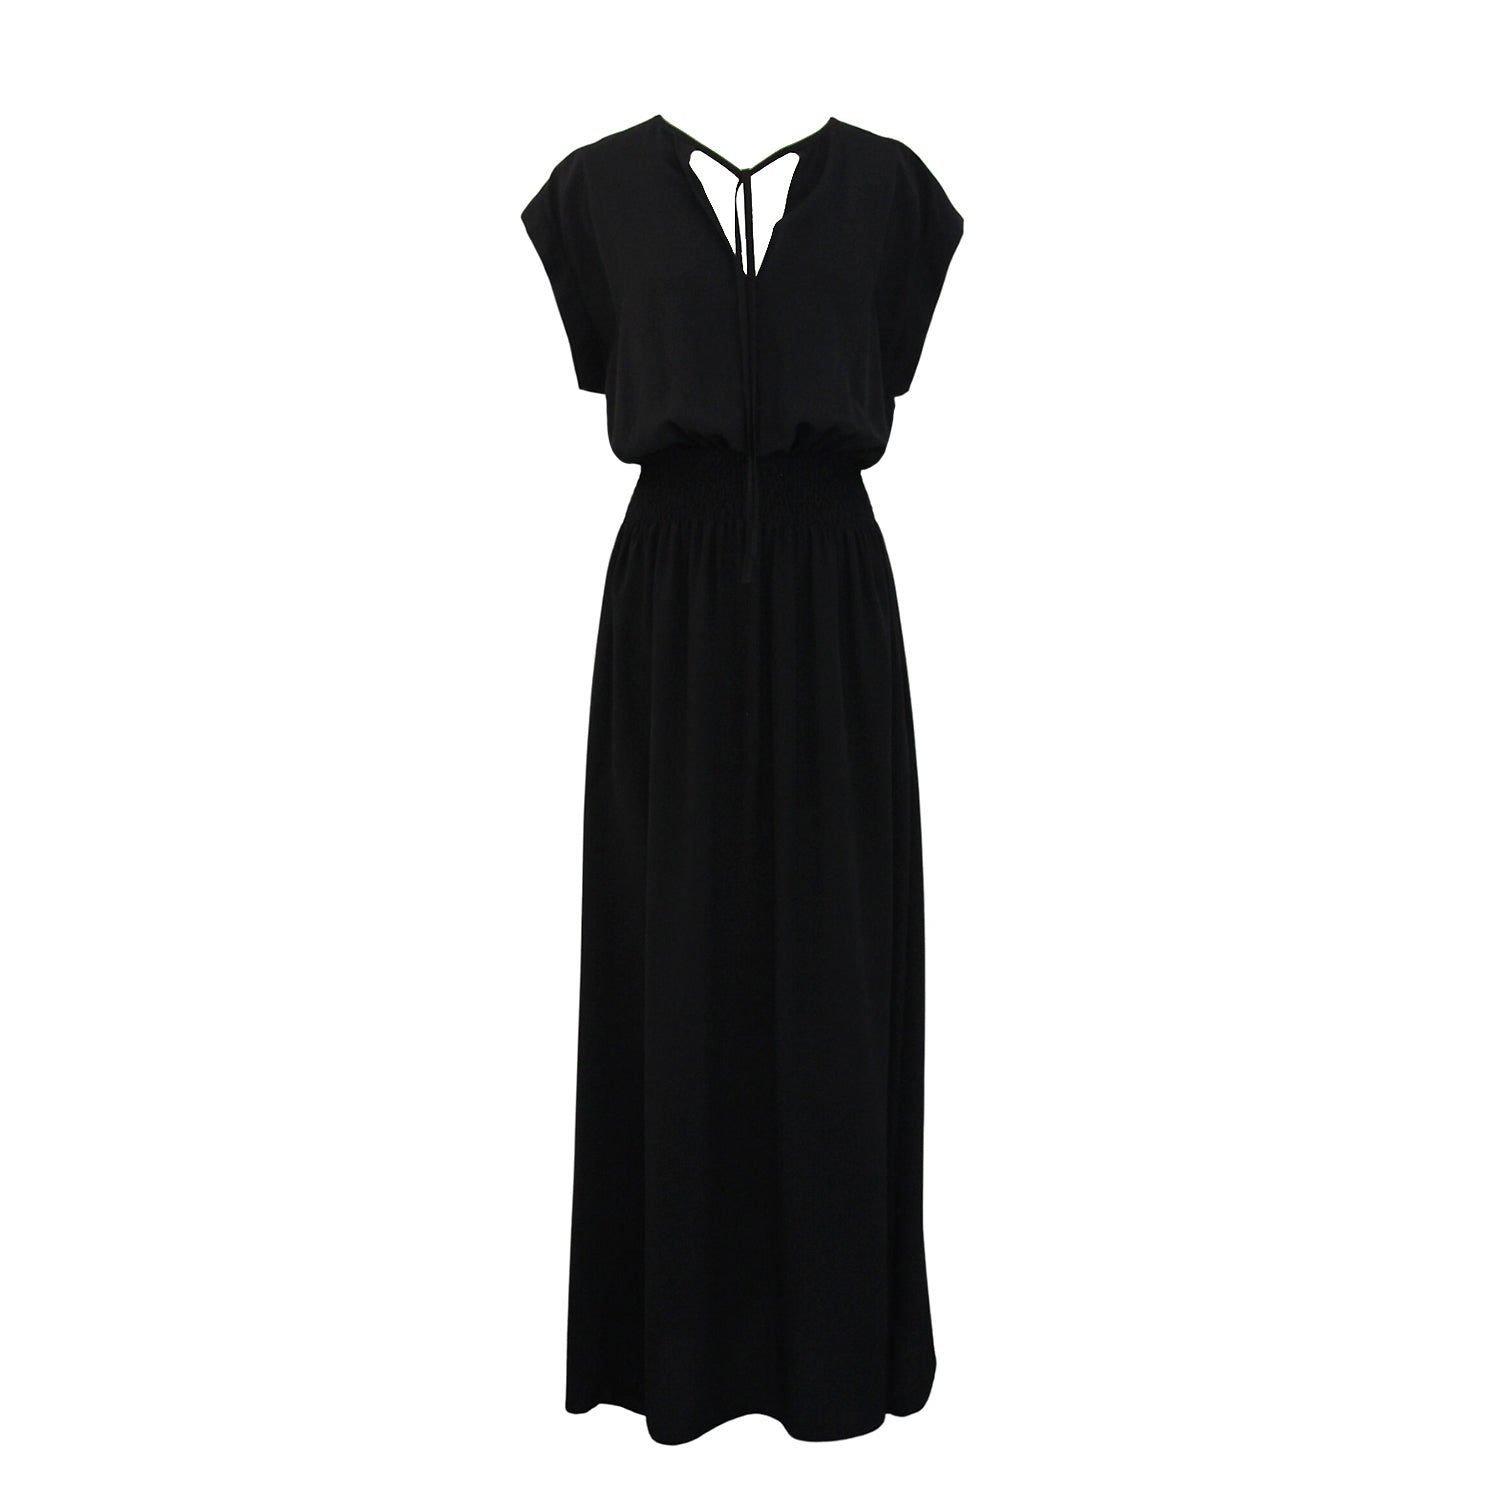 Stylish Black Silk Dress by Gosia Orlowska